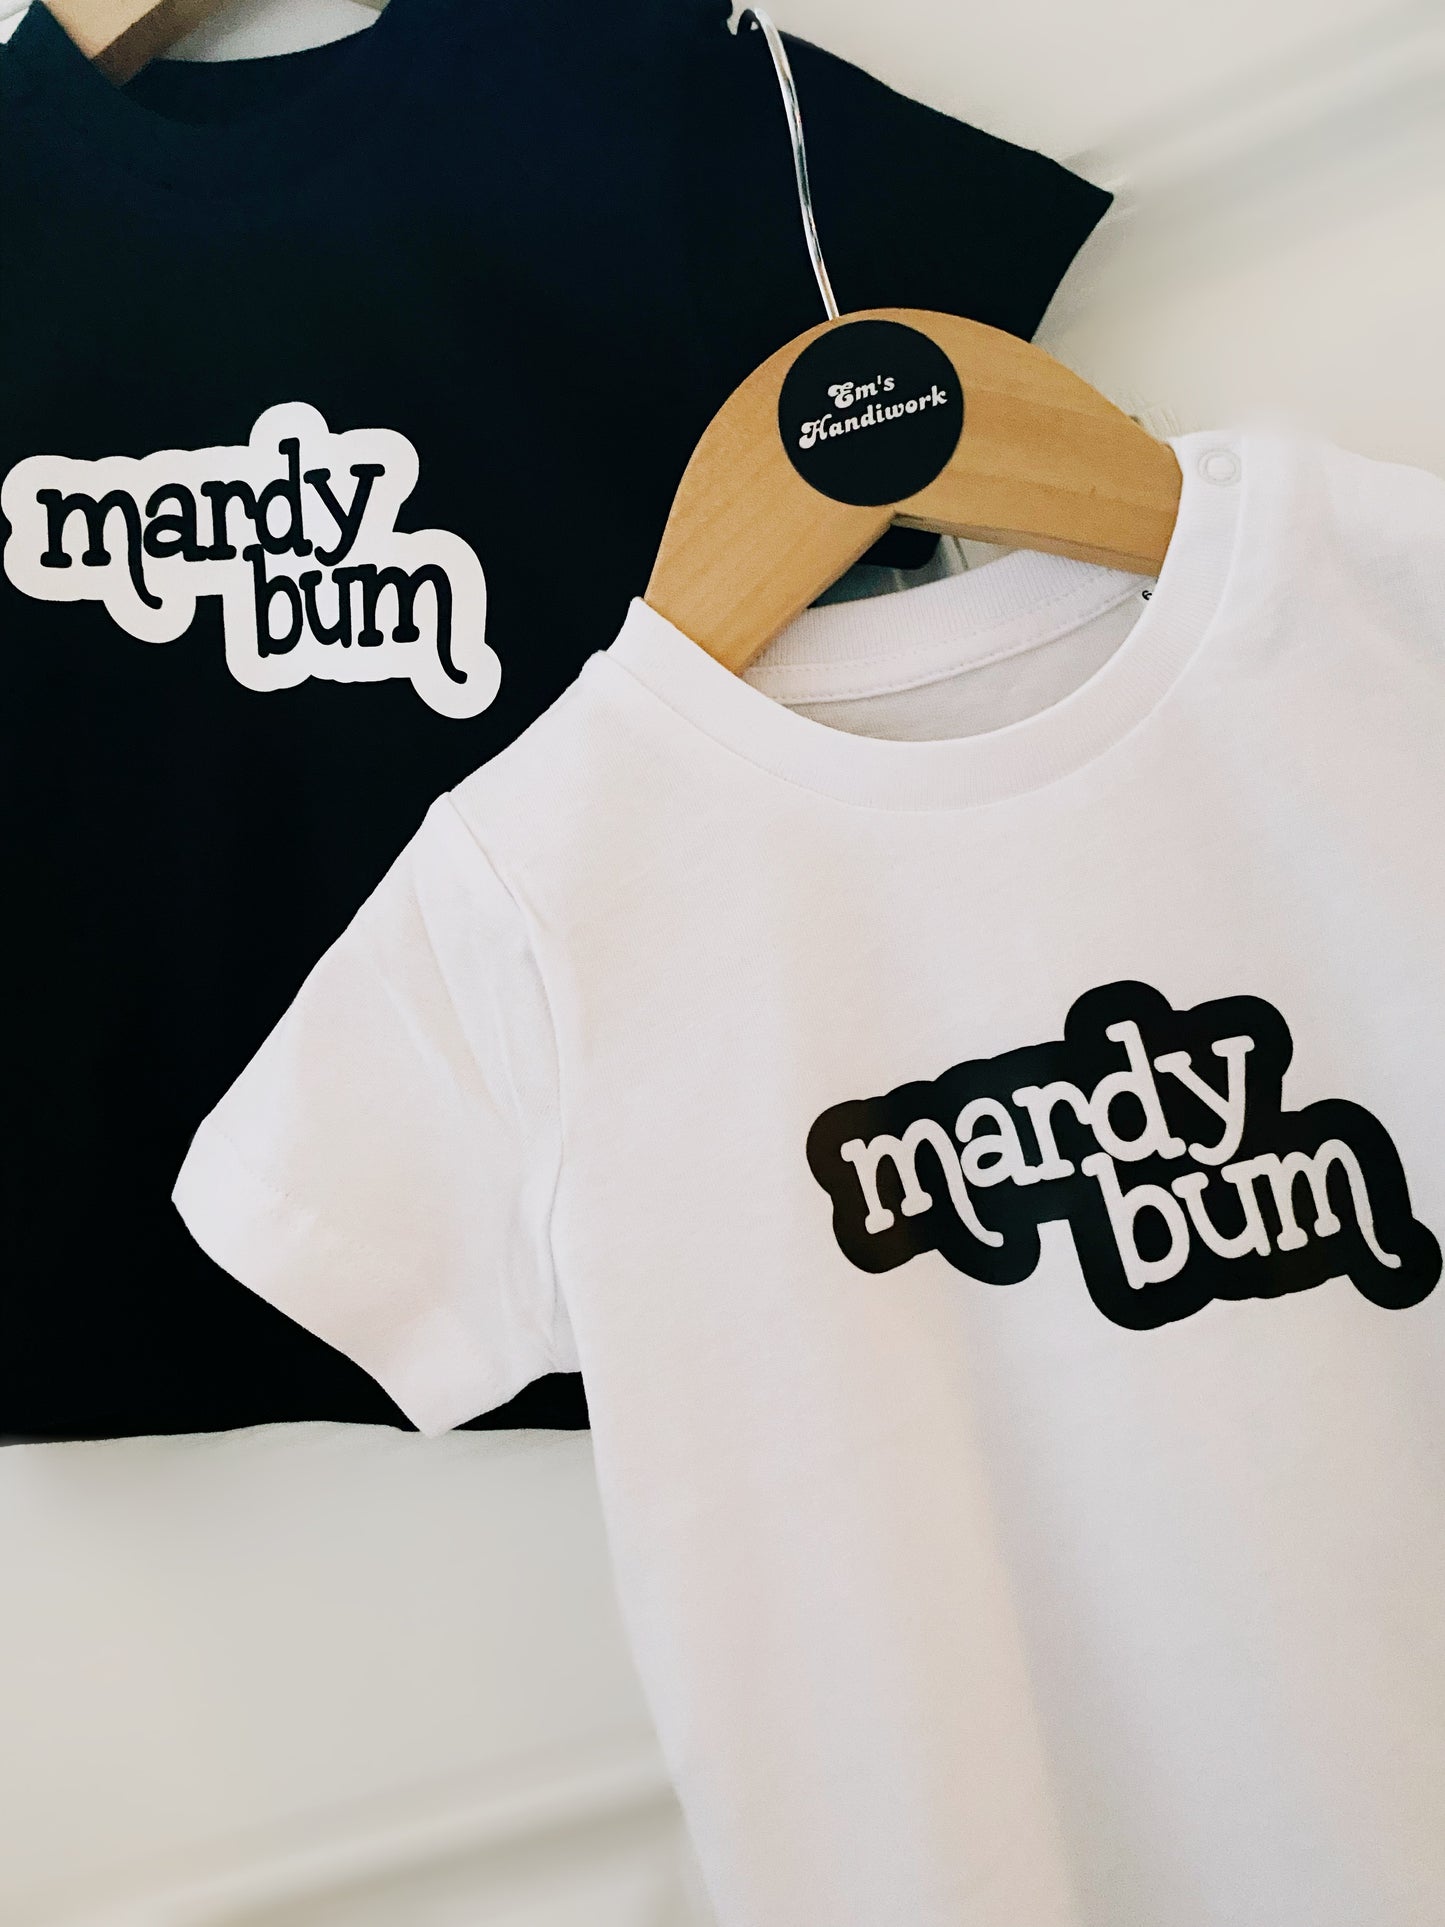 Mardy Bum Kids T-Shirt